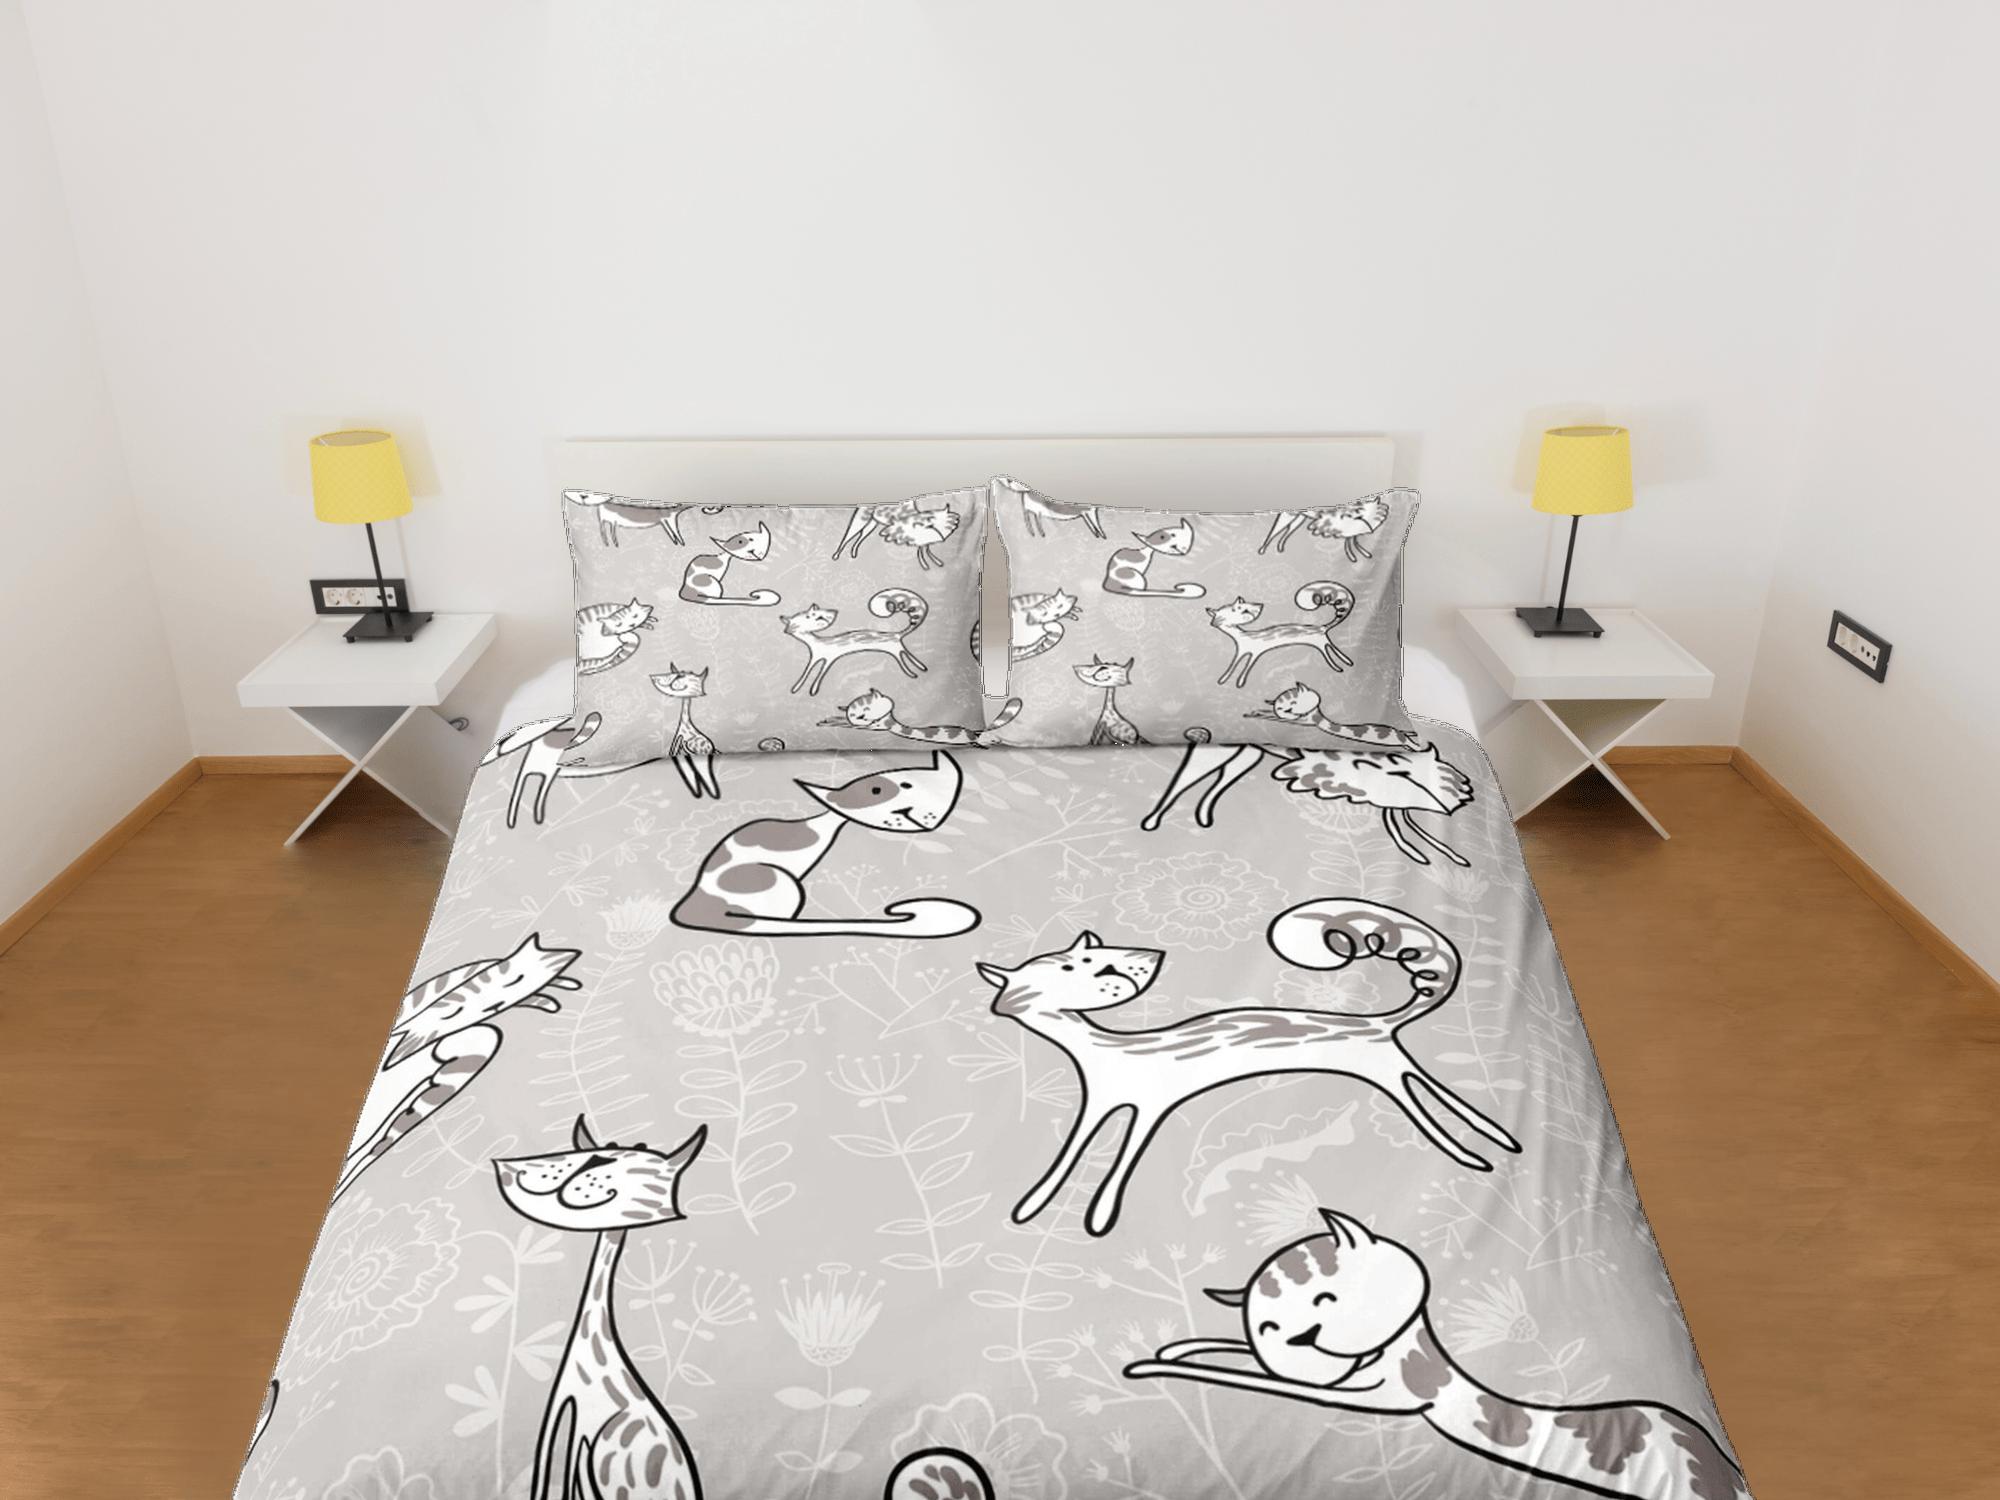 daintyduvet Playful cat bedding, minimalist floral prints, toddler bedding, kids duvet cover set, gift for cat lovers, baby bedding, baby shower gift